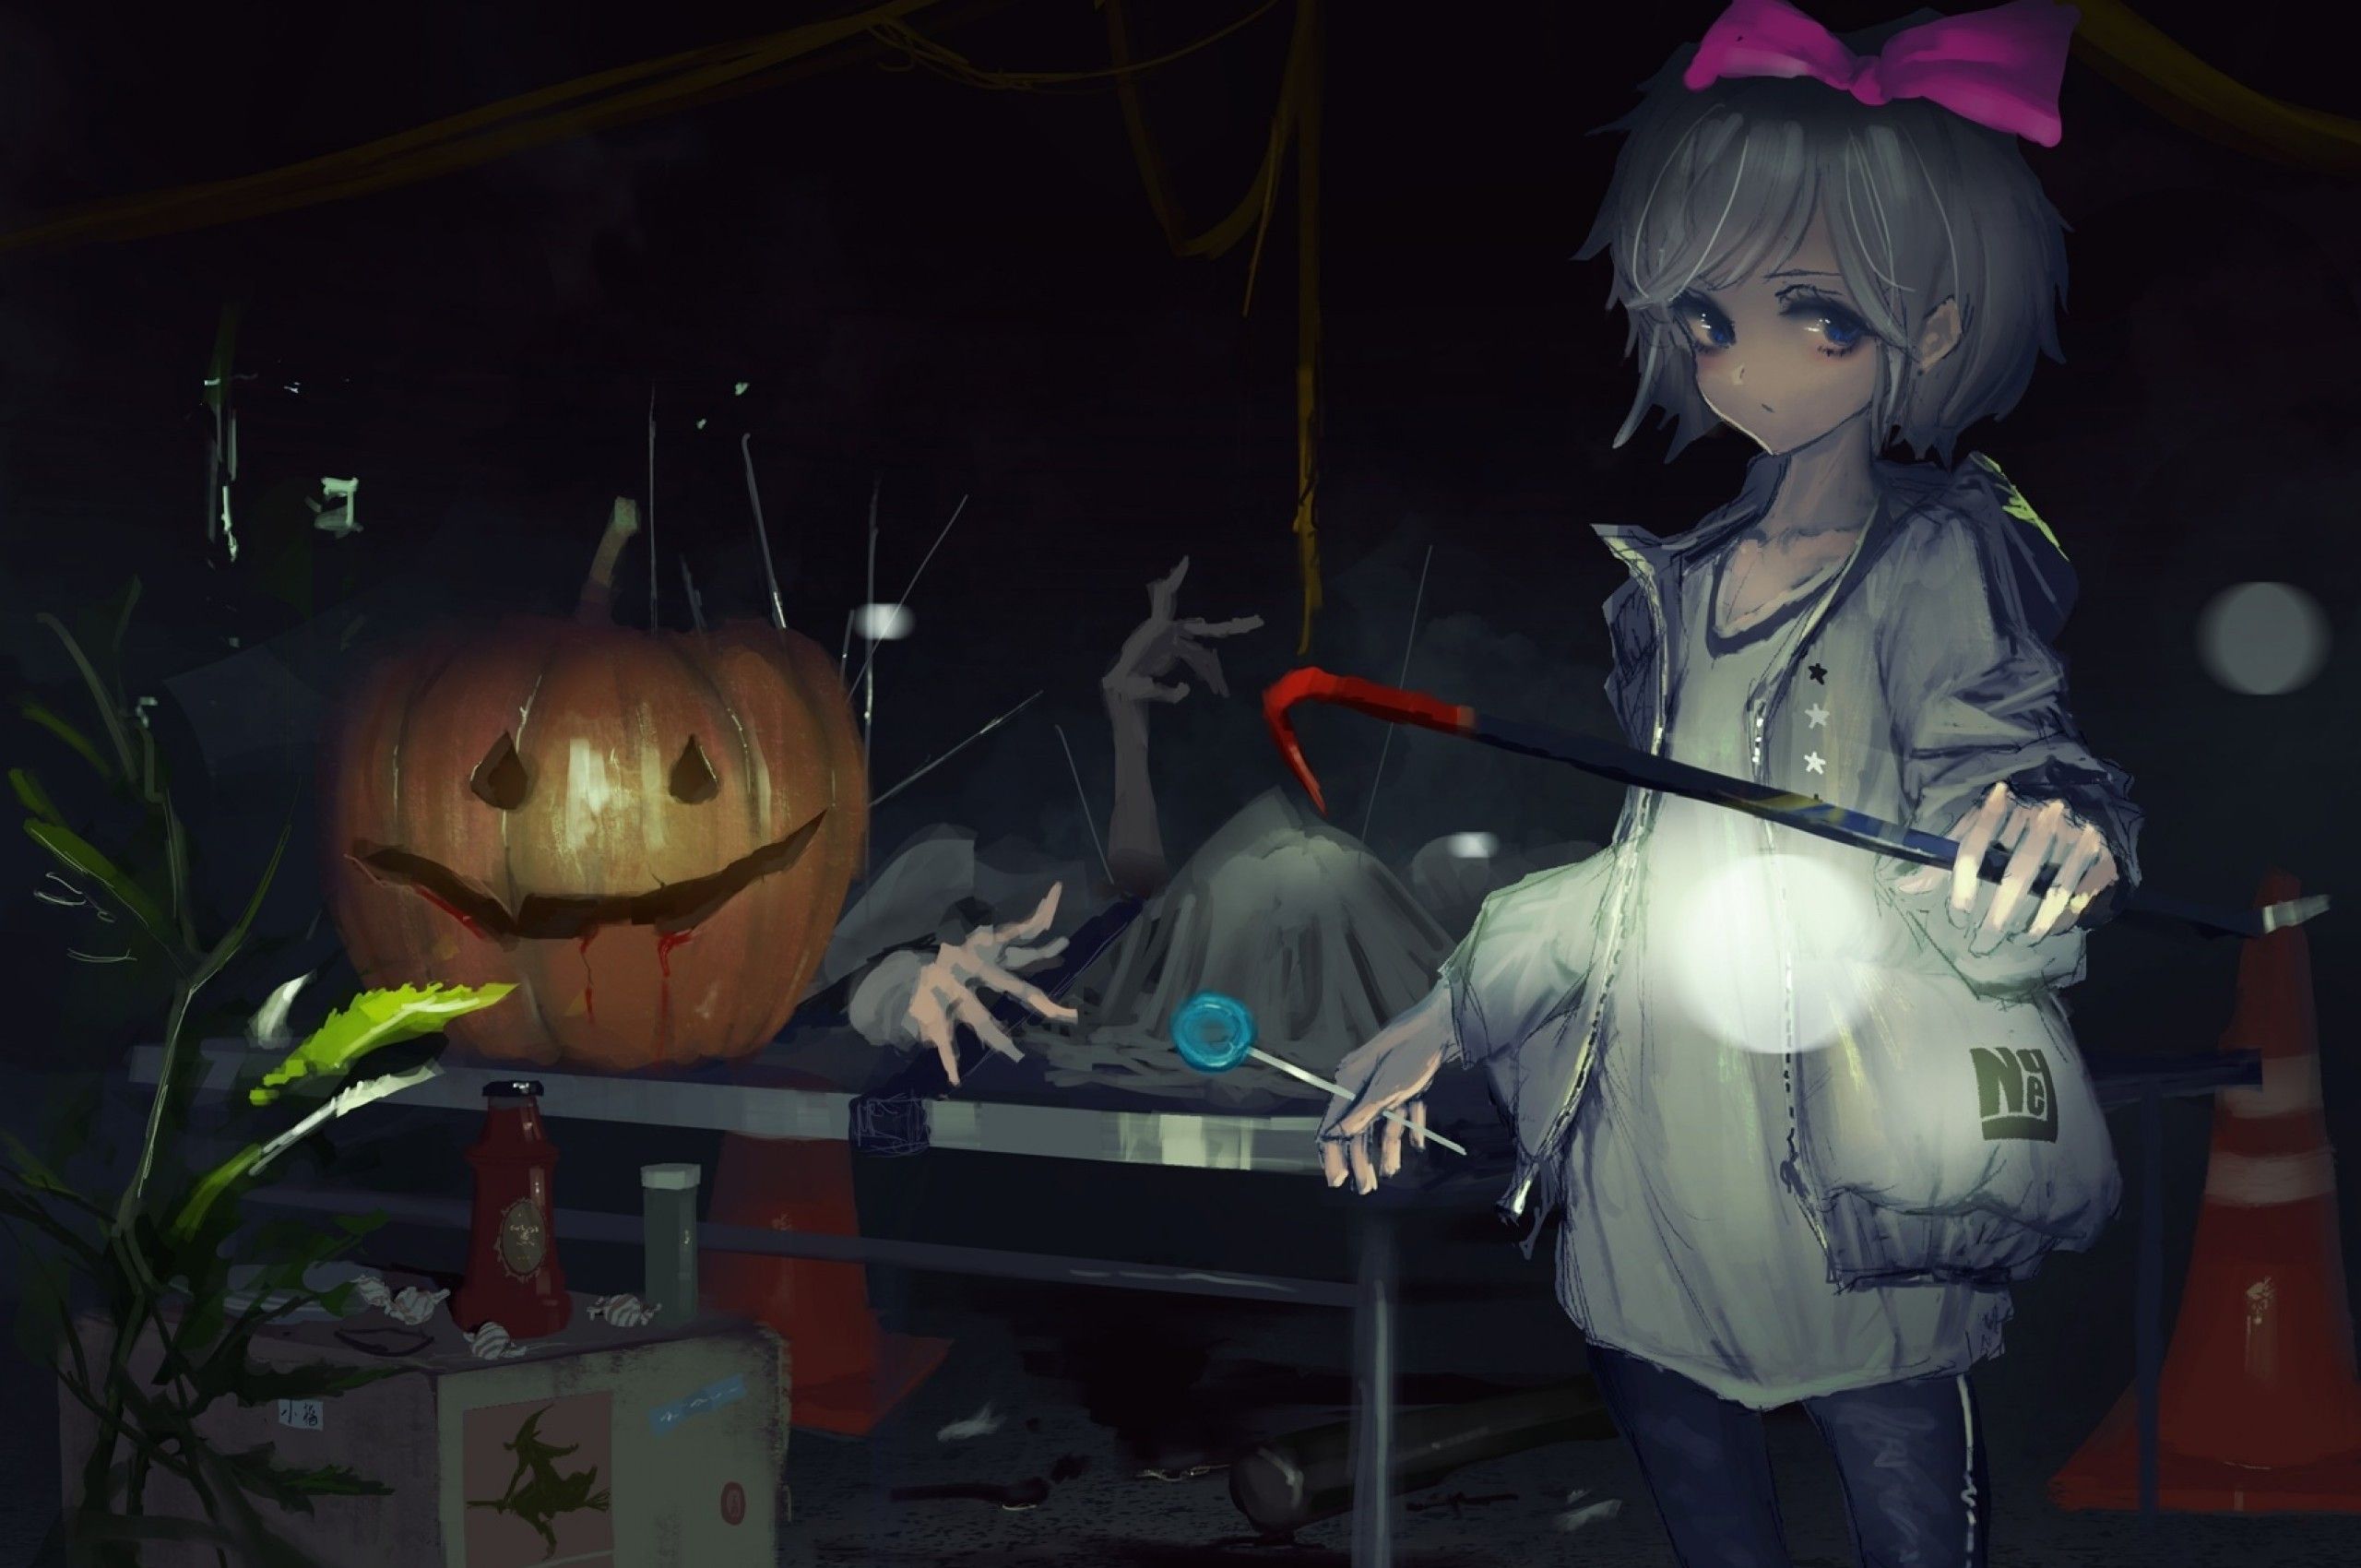 Download 2560x1700 Anime Boy, Halloween Pumpkin, Scary Wallpaper for Chromebook Pixel